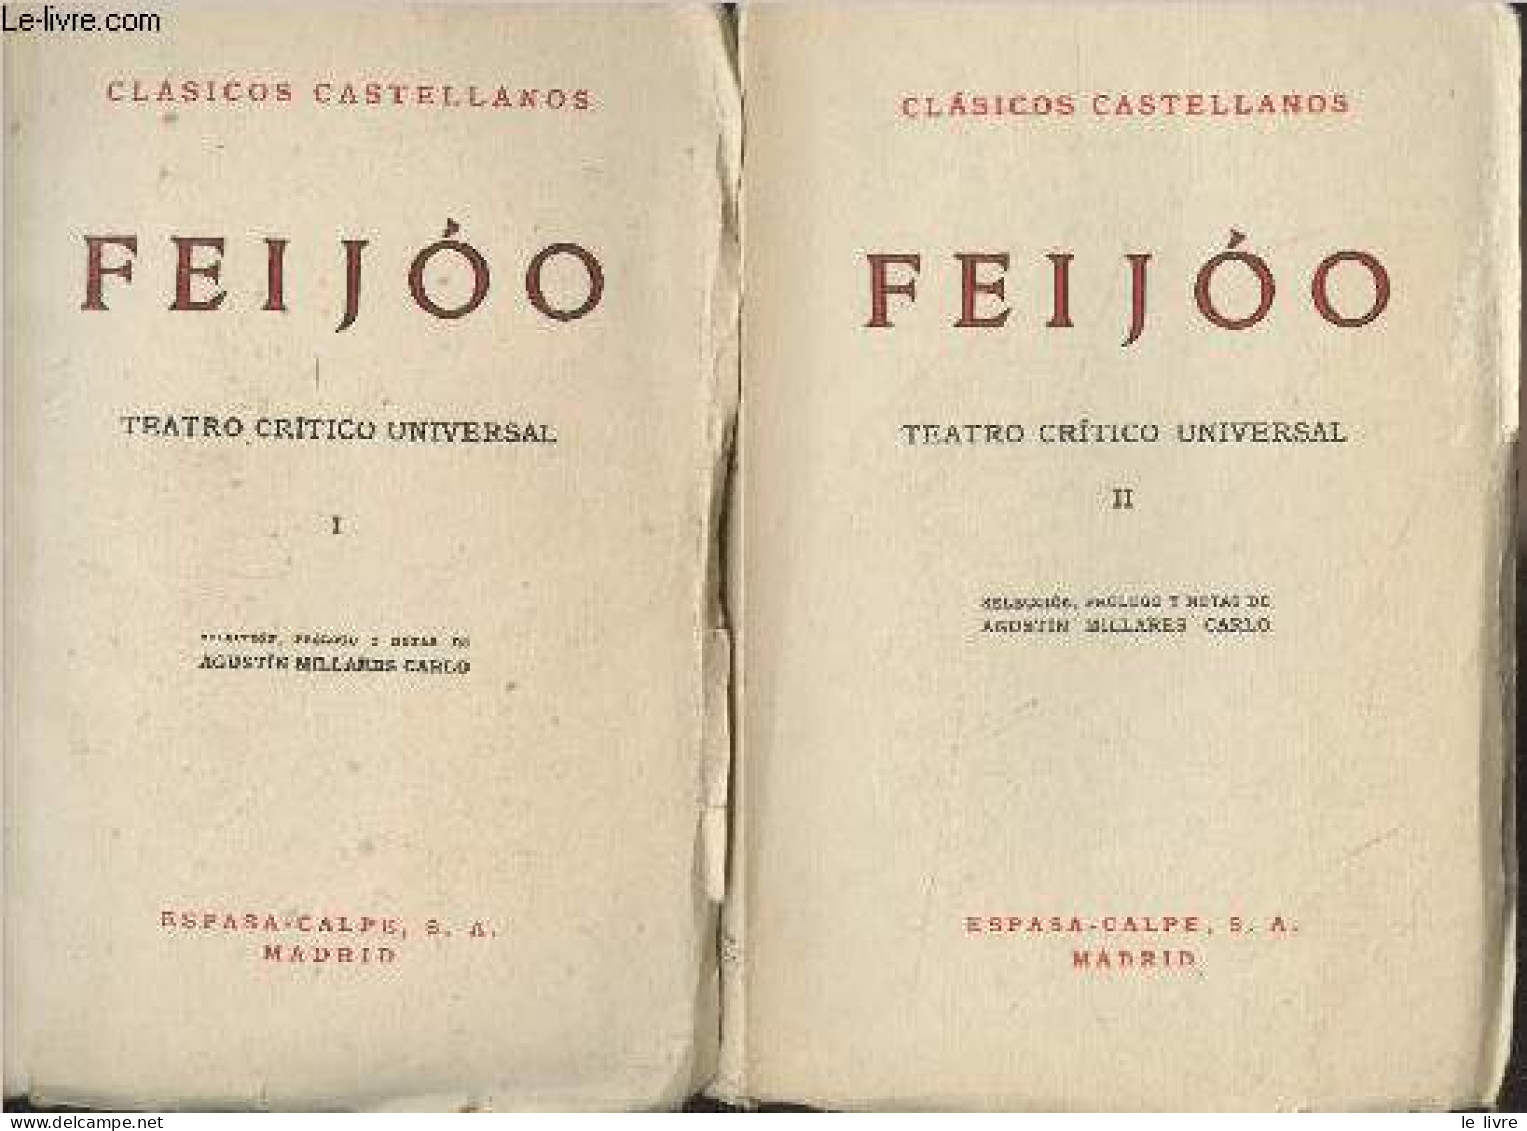 Teatro Critico Universal - III - "Clasicos Castellanos" N°48/53 - Feijoo - 1965 - Ontwikkeling